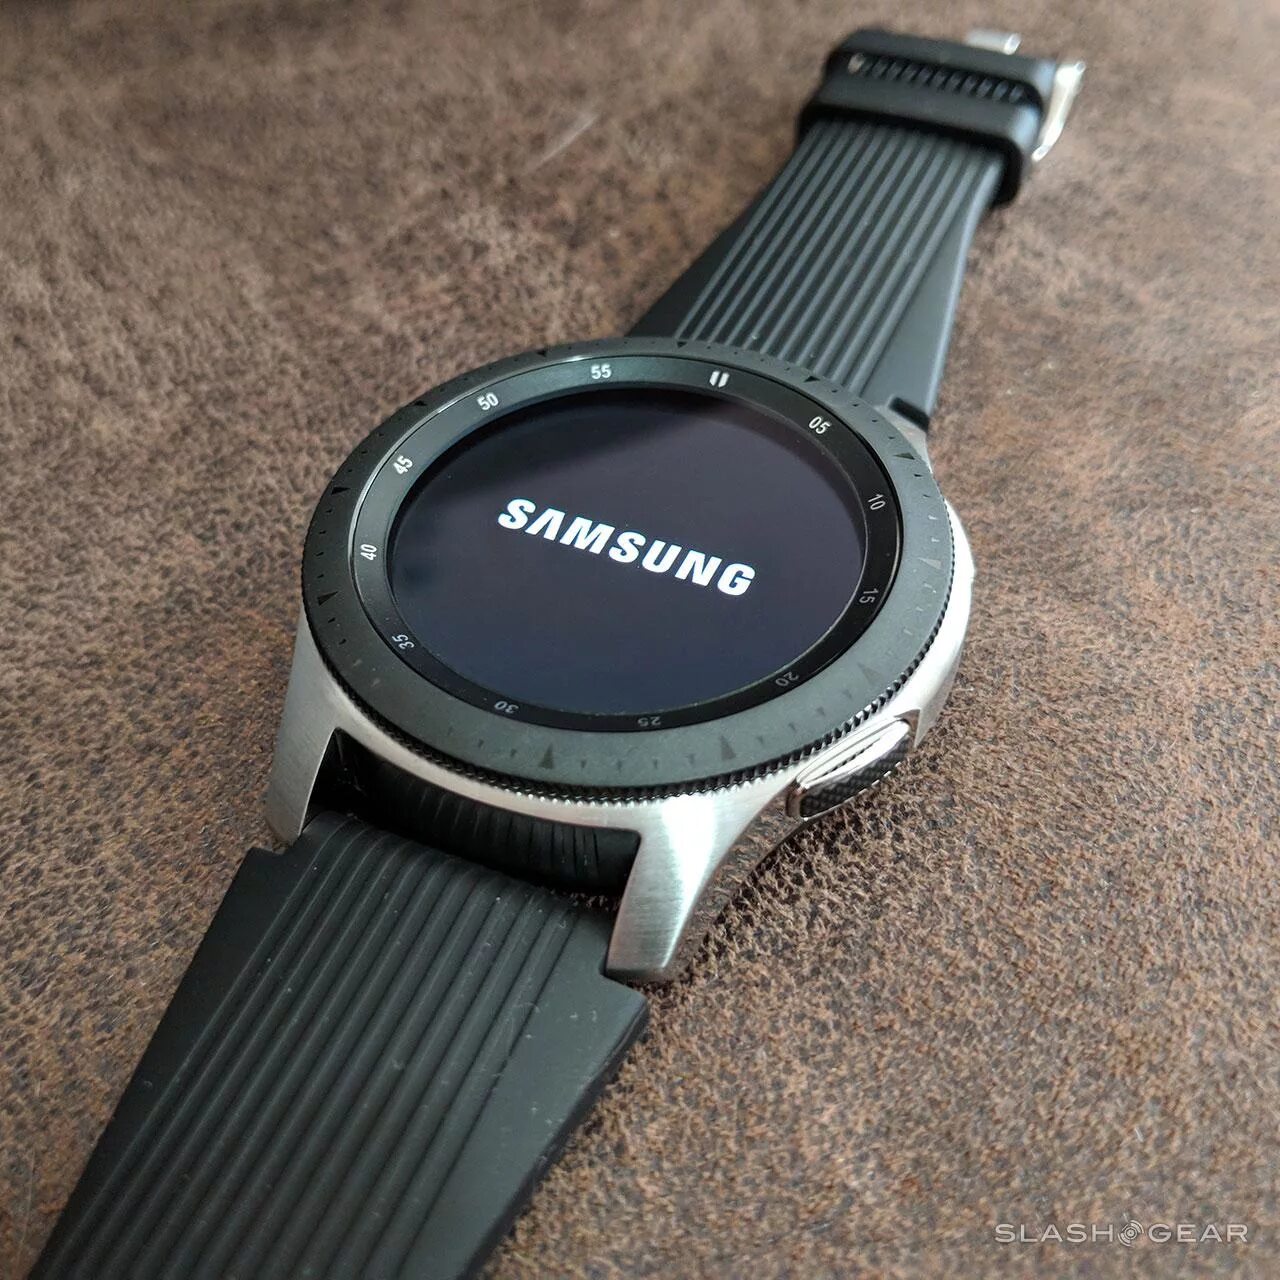 Samsung watch sm r800. Samsung Galaxy watch r800. Samsung Galaxy watch SM-r800. Samsung Galaxy watch 46mm SM-r800 Silver. Samsung Galaxy watch 46mm Silver r800.